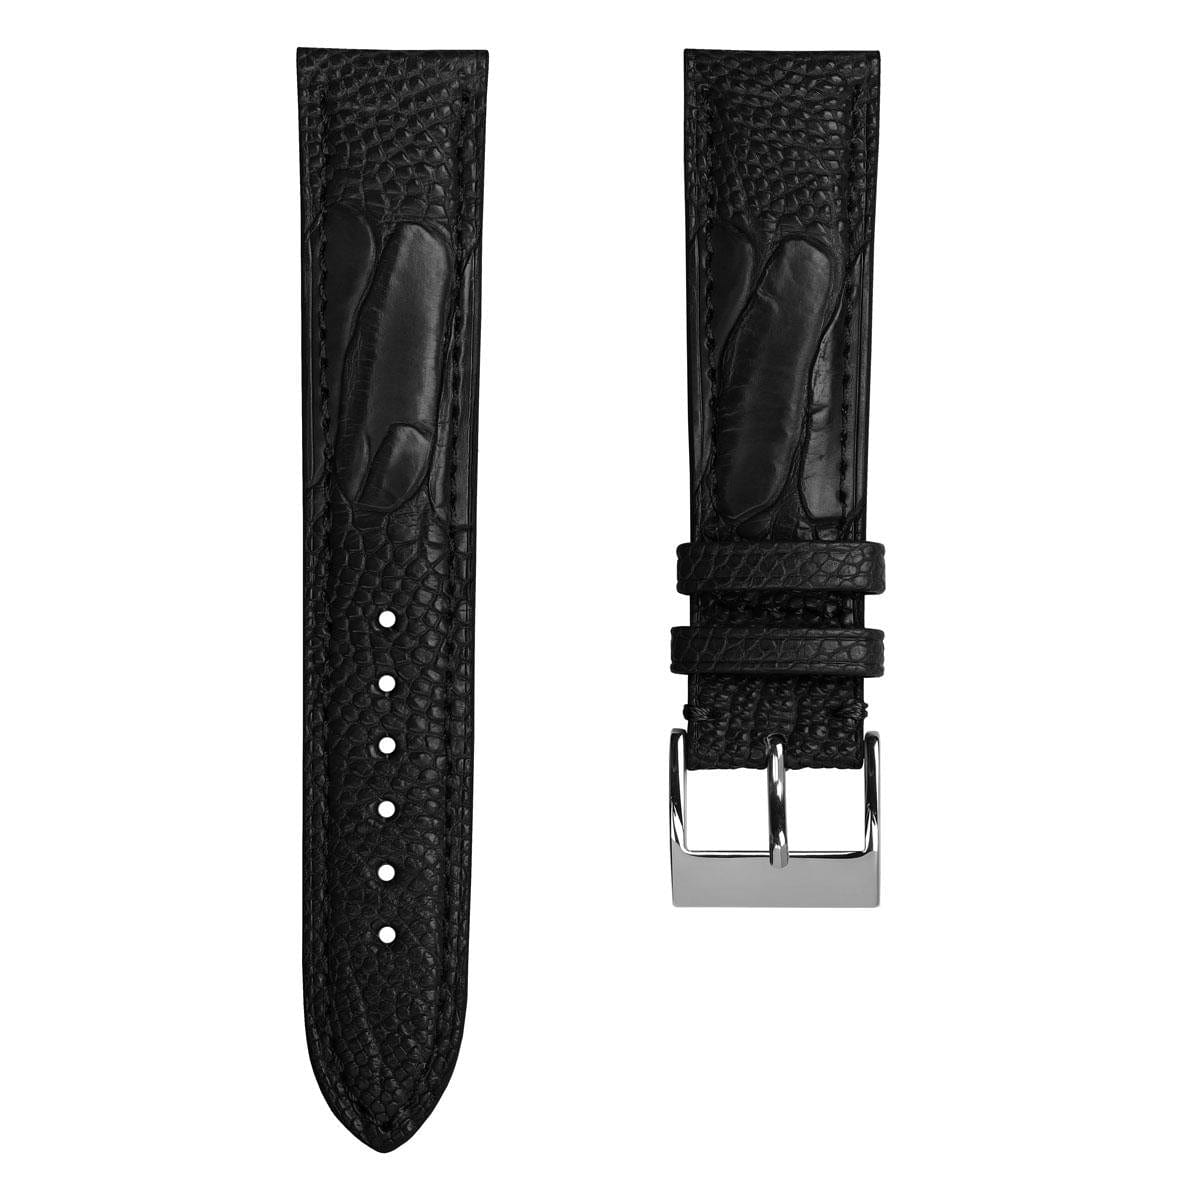 Ostrich Leather Watch Strap | Bespoke Straps